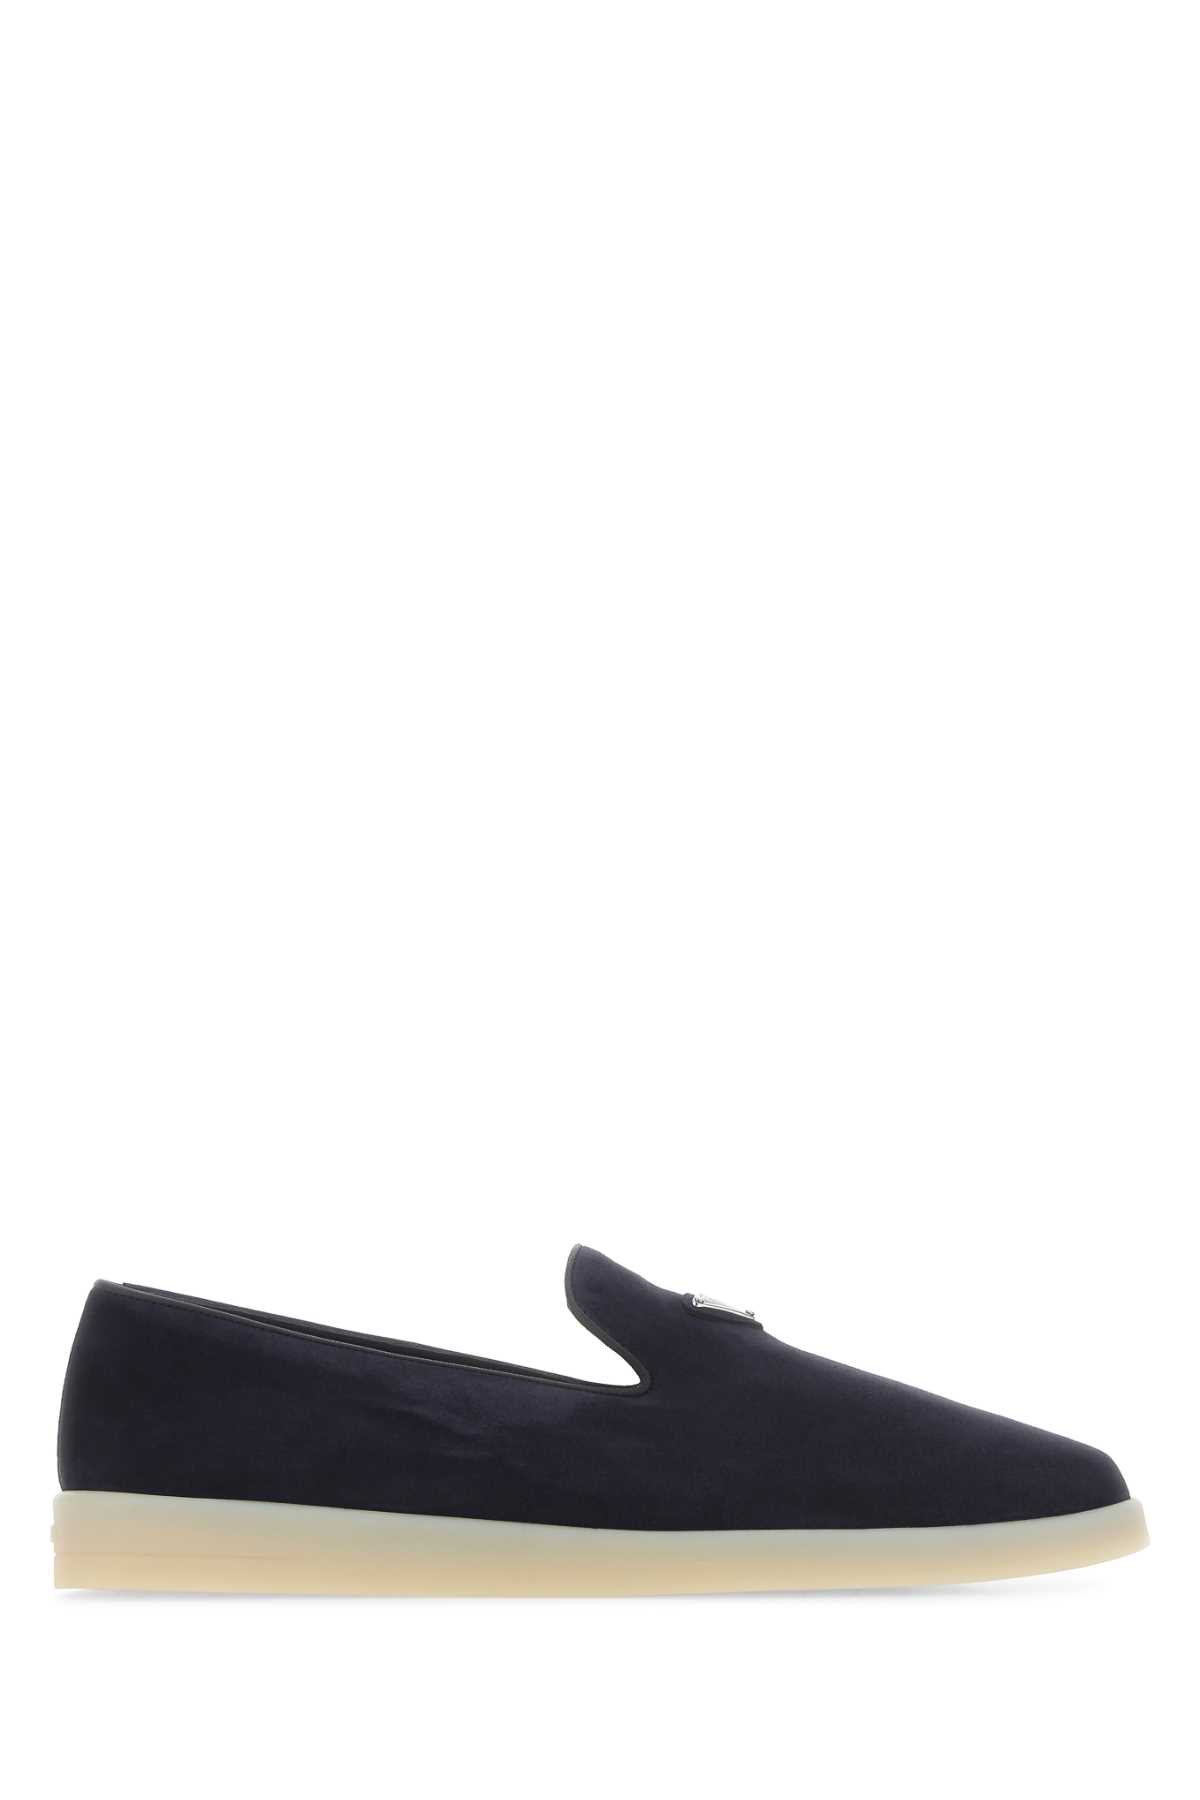 Prada Navy Blue Suede Loafers In Black